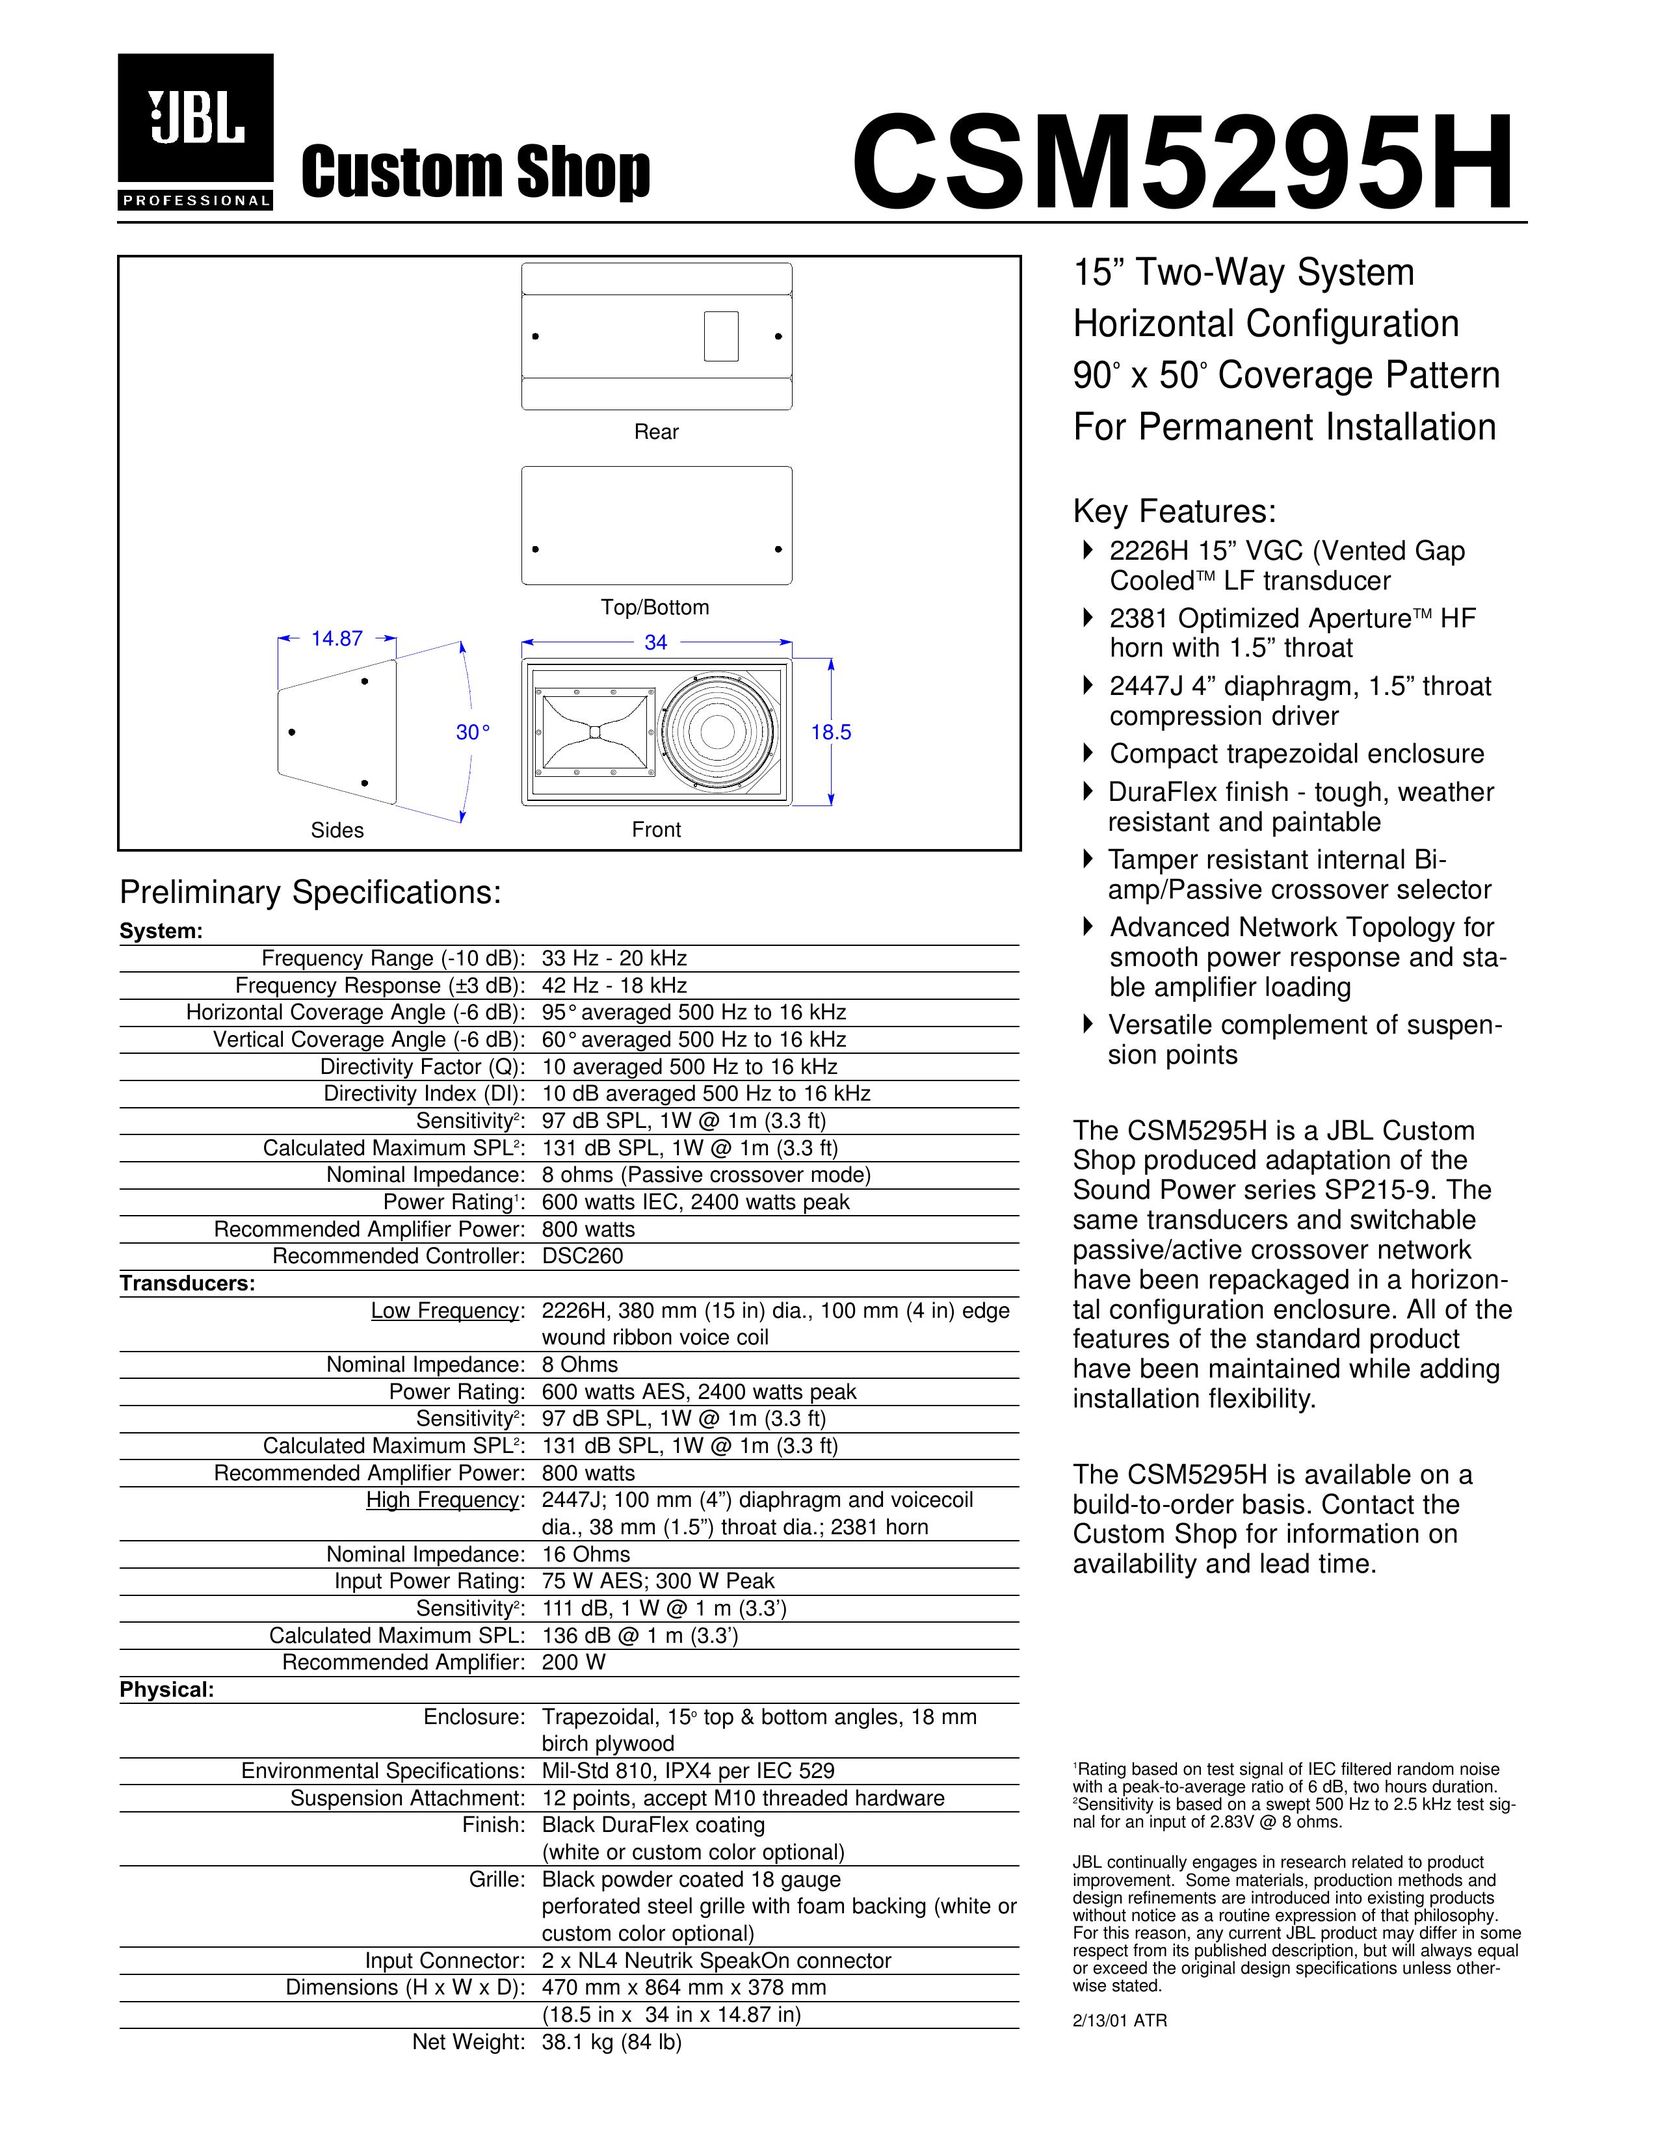 3Com CSM5295H Two-Way Radio User Manual